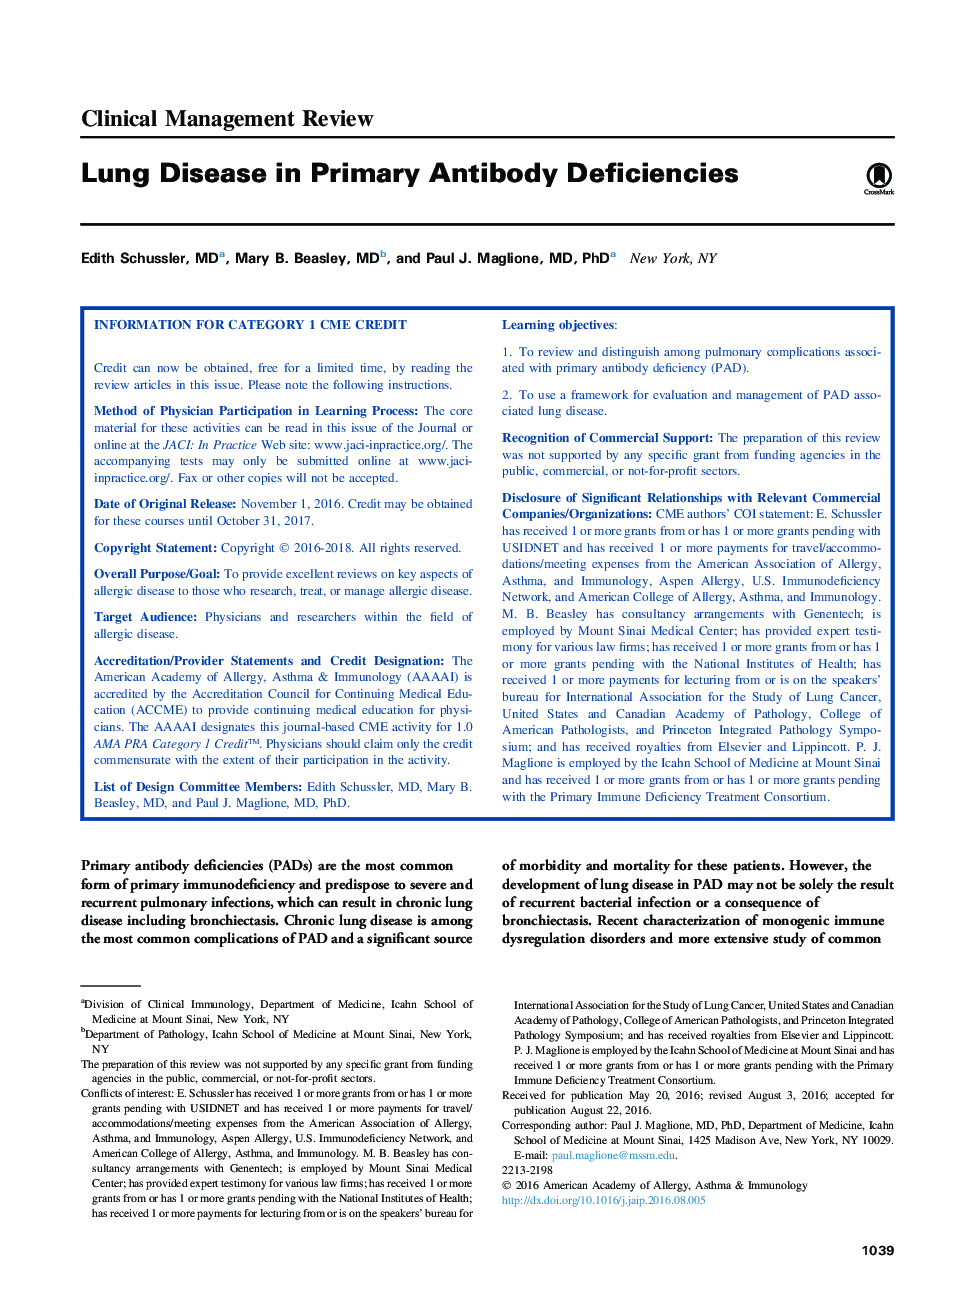 Lung Disease in Primary Antibody Deficiencies